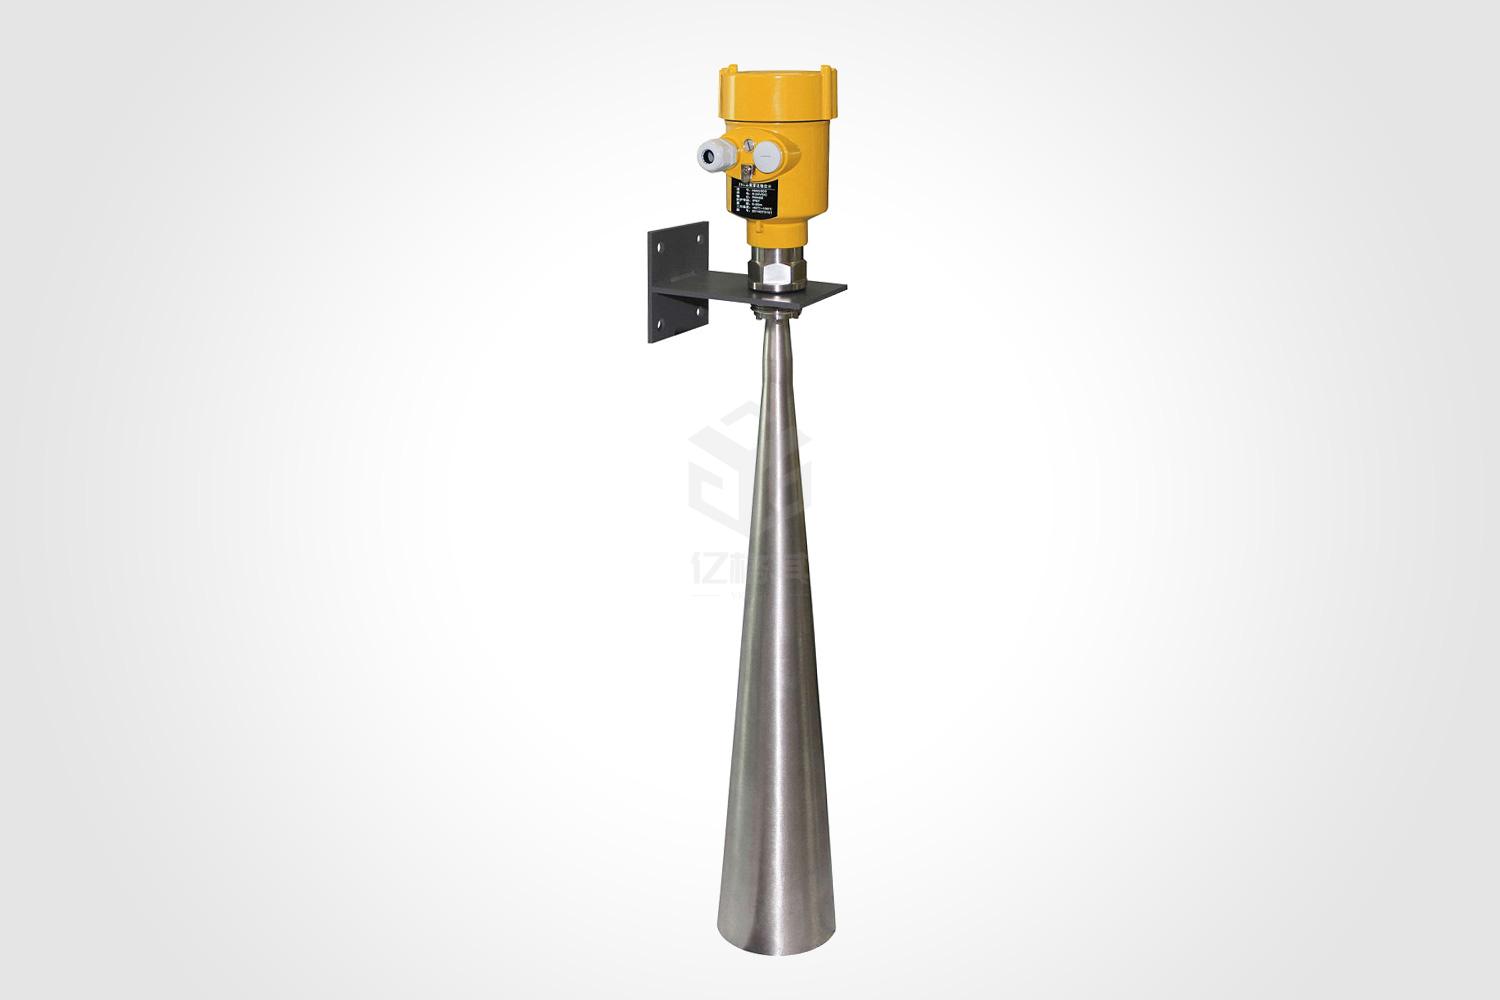 YGQ-RD909 high frequency water conservancy radar Level Meter